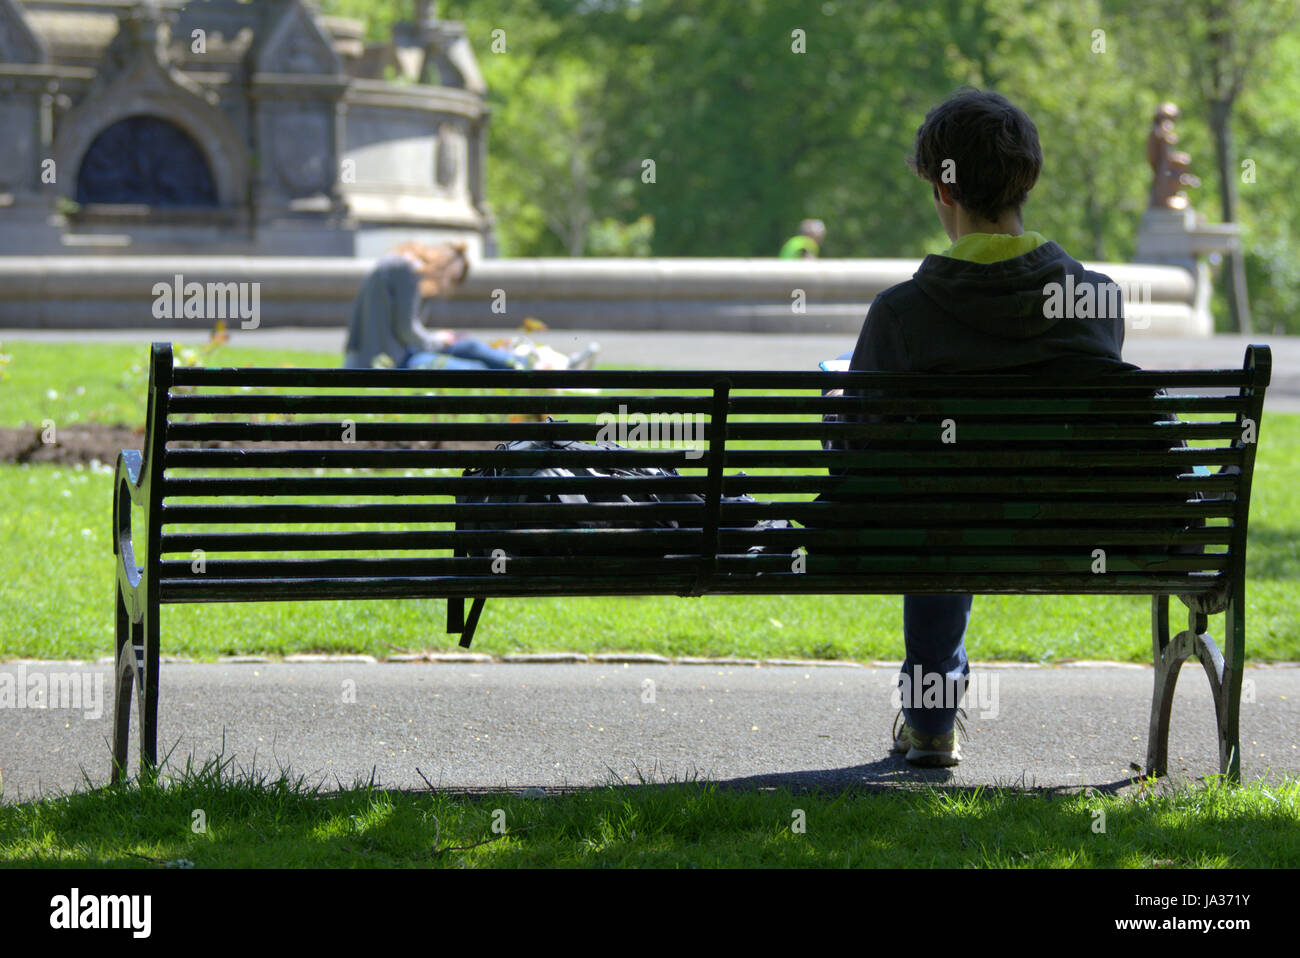 Glasgow Kelvingrove park scenes boy sitting bench eyeing girl Stock Photo